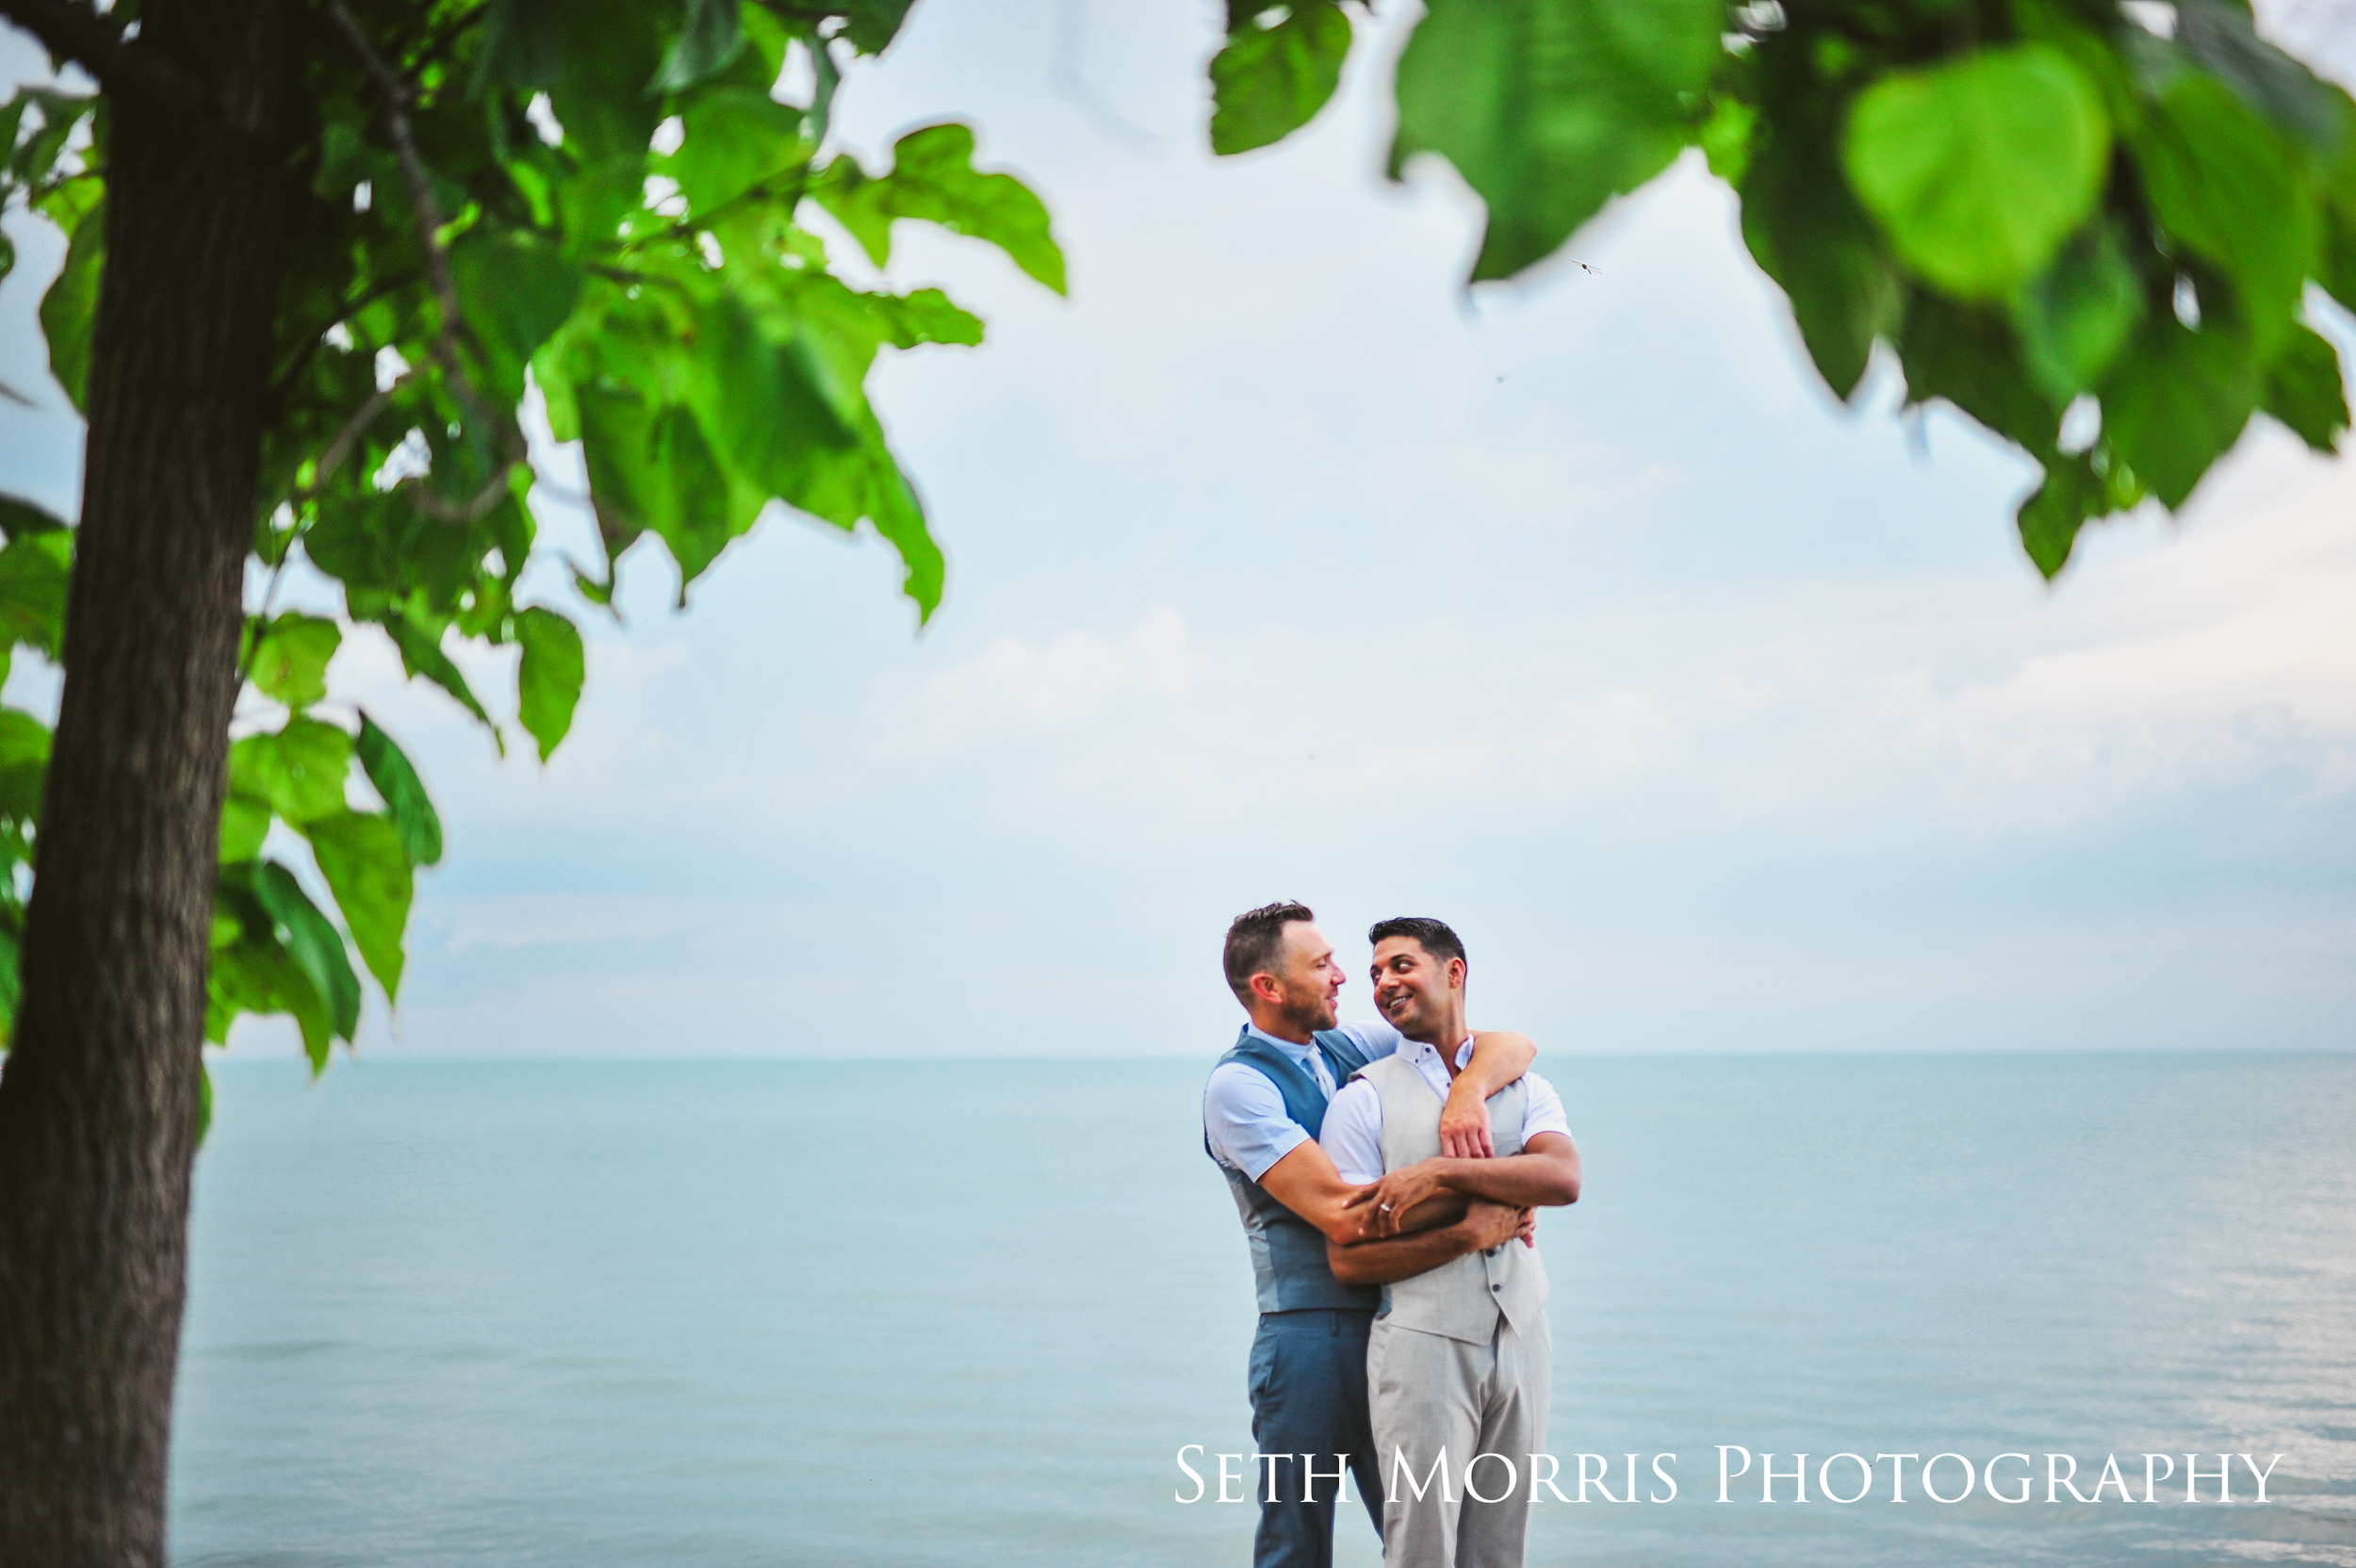 chicagoland-engagement-photographer-same-sex-wedding-8.JPG